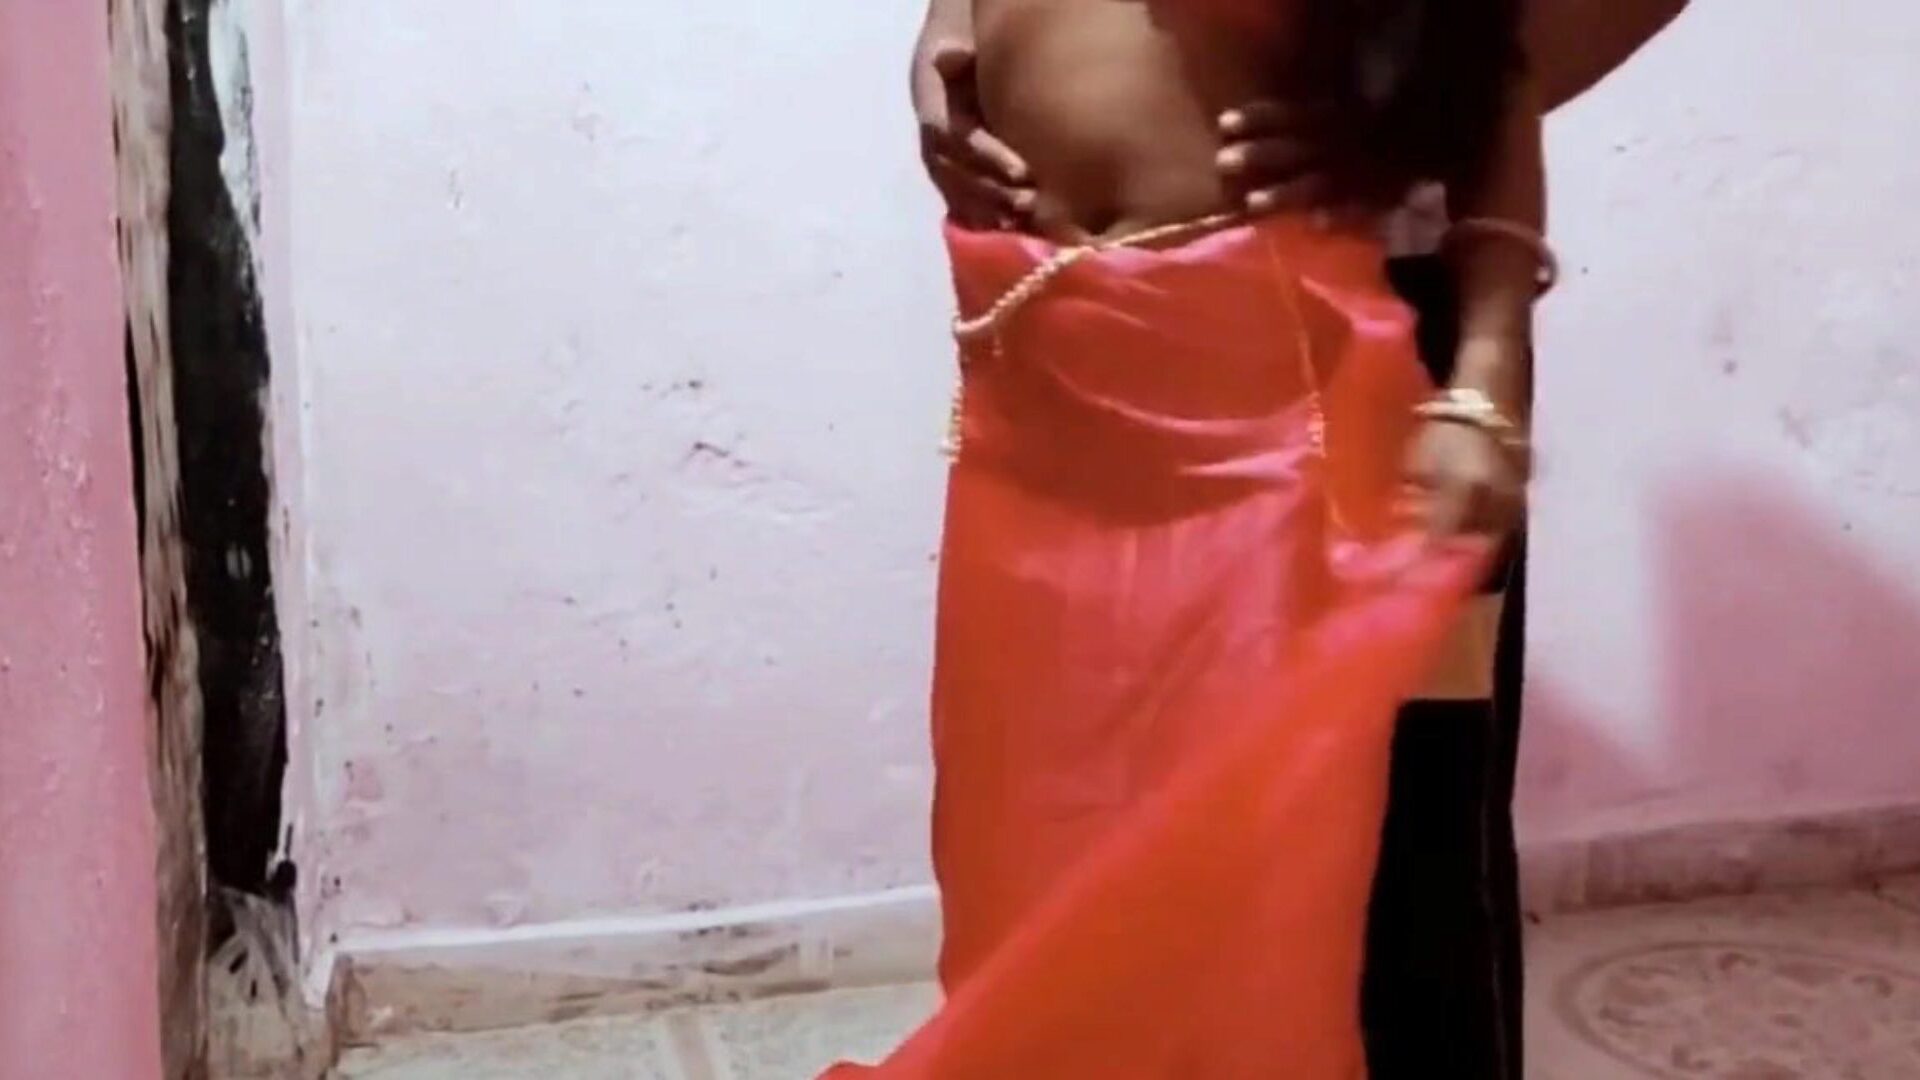 alex ne bhabhi ko choda kamerplezier met manlief: gratis porno b9 bekijk alex ne bhabhi ko choda kamerplezier met manlief filmscène op xhamster - het ultieme archief van gratis Sri Lankaanse Aziatische hd xxx pornografie tube filmscènes